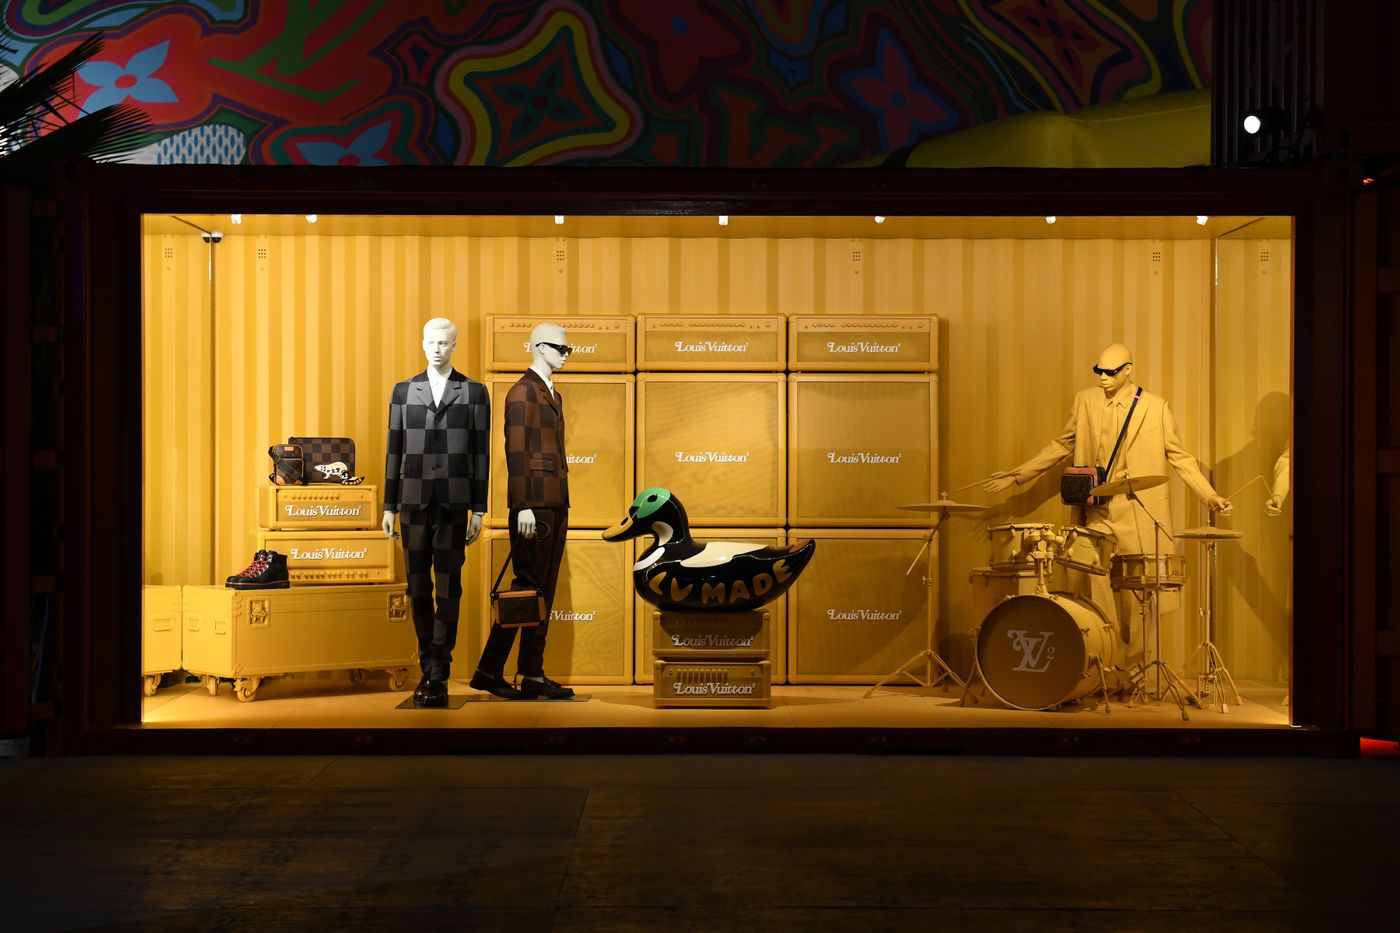 A Louis Vuitton Menswear Pop-Up and Auction